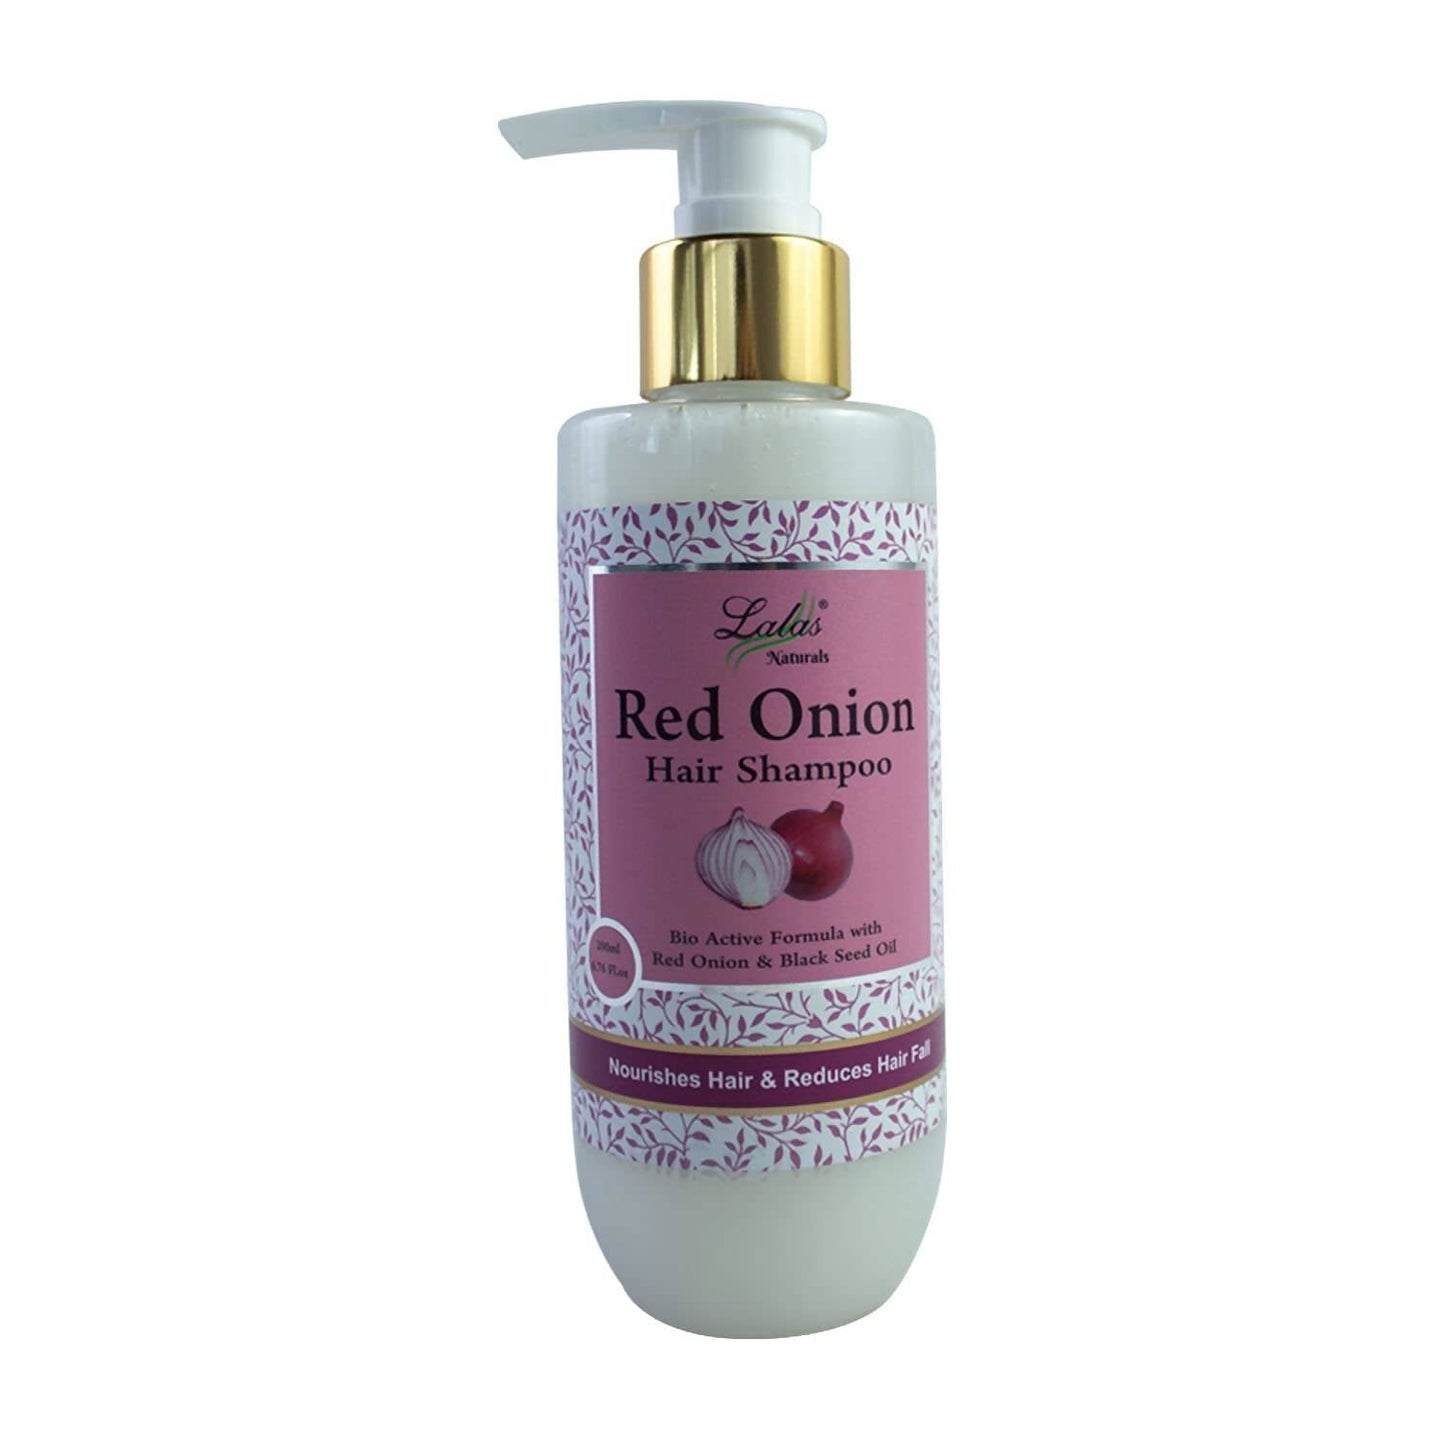 Lalas Naturals Red Onion Hair Shampoo